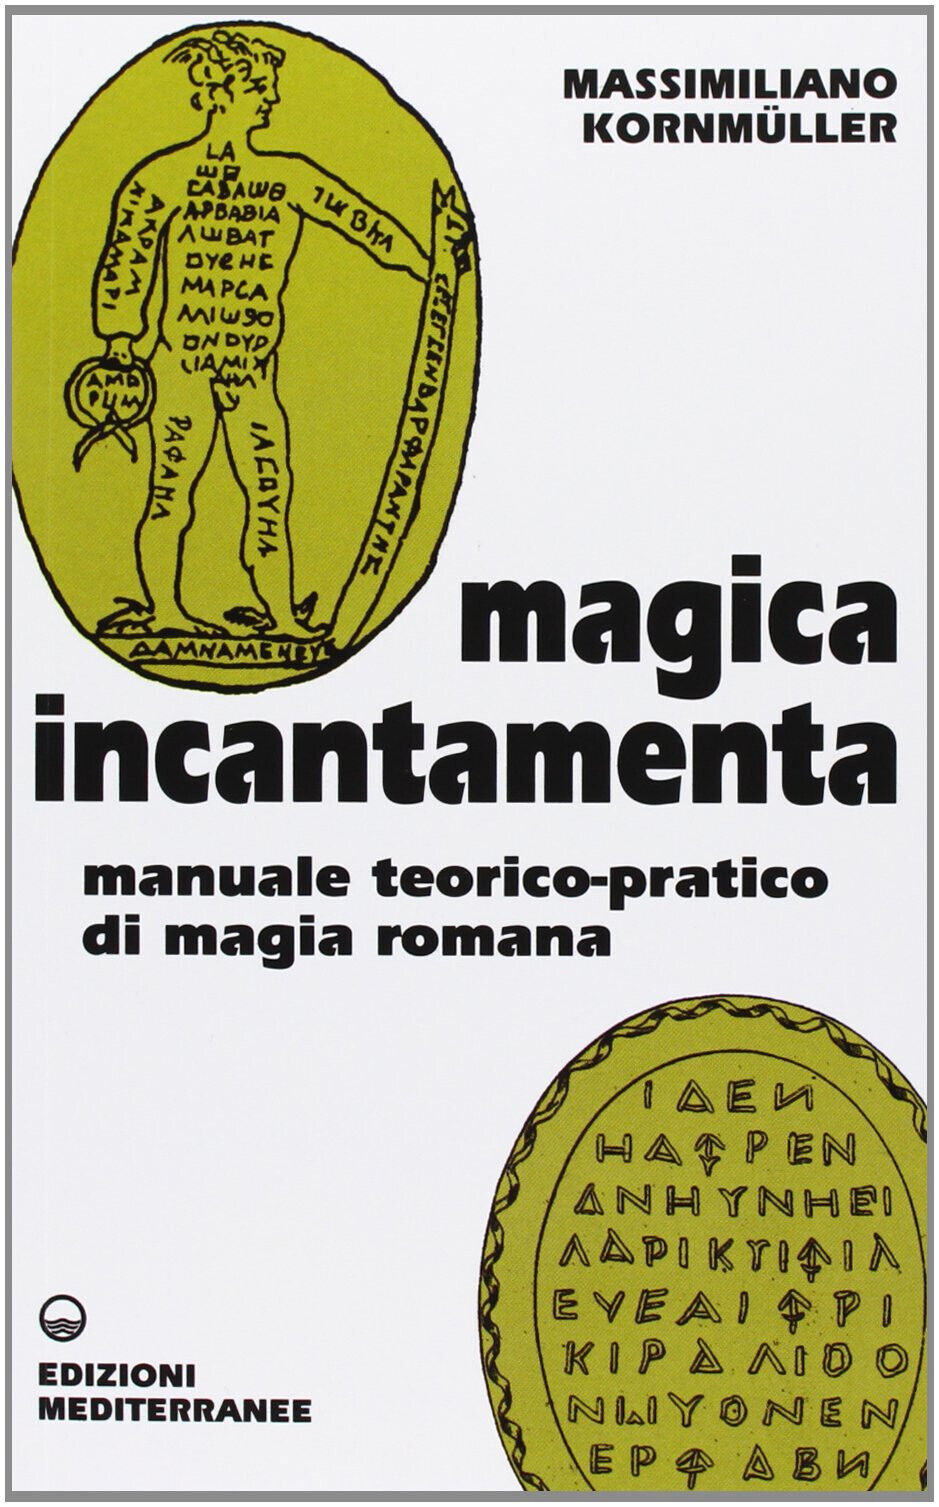 Magica incantamenta - Massimiliano Kornm?ller - Edizioni Mediterranee, 2013